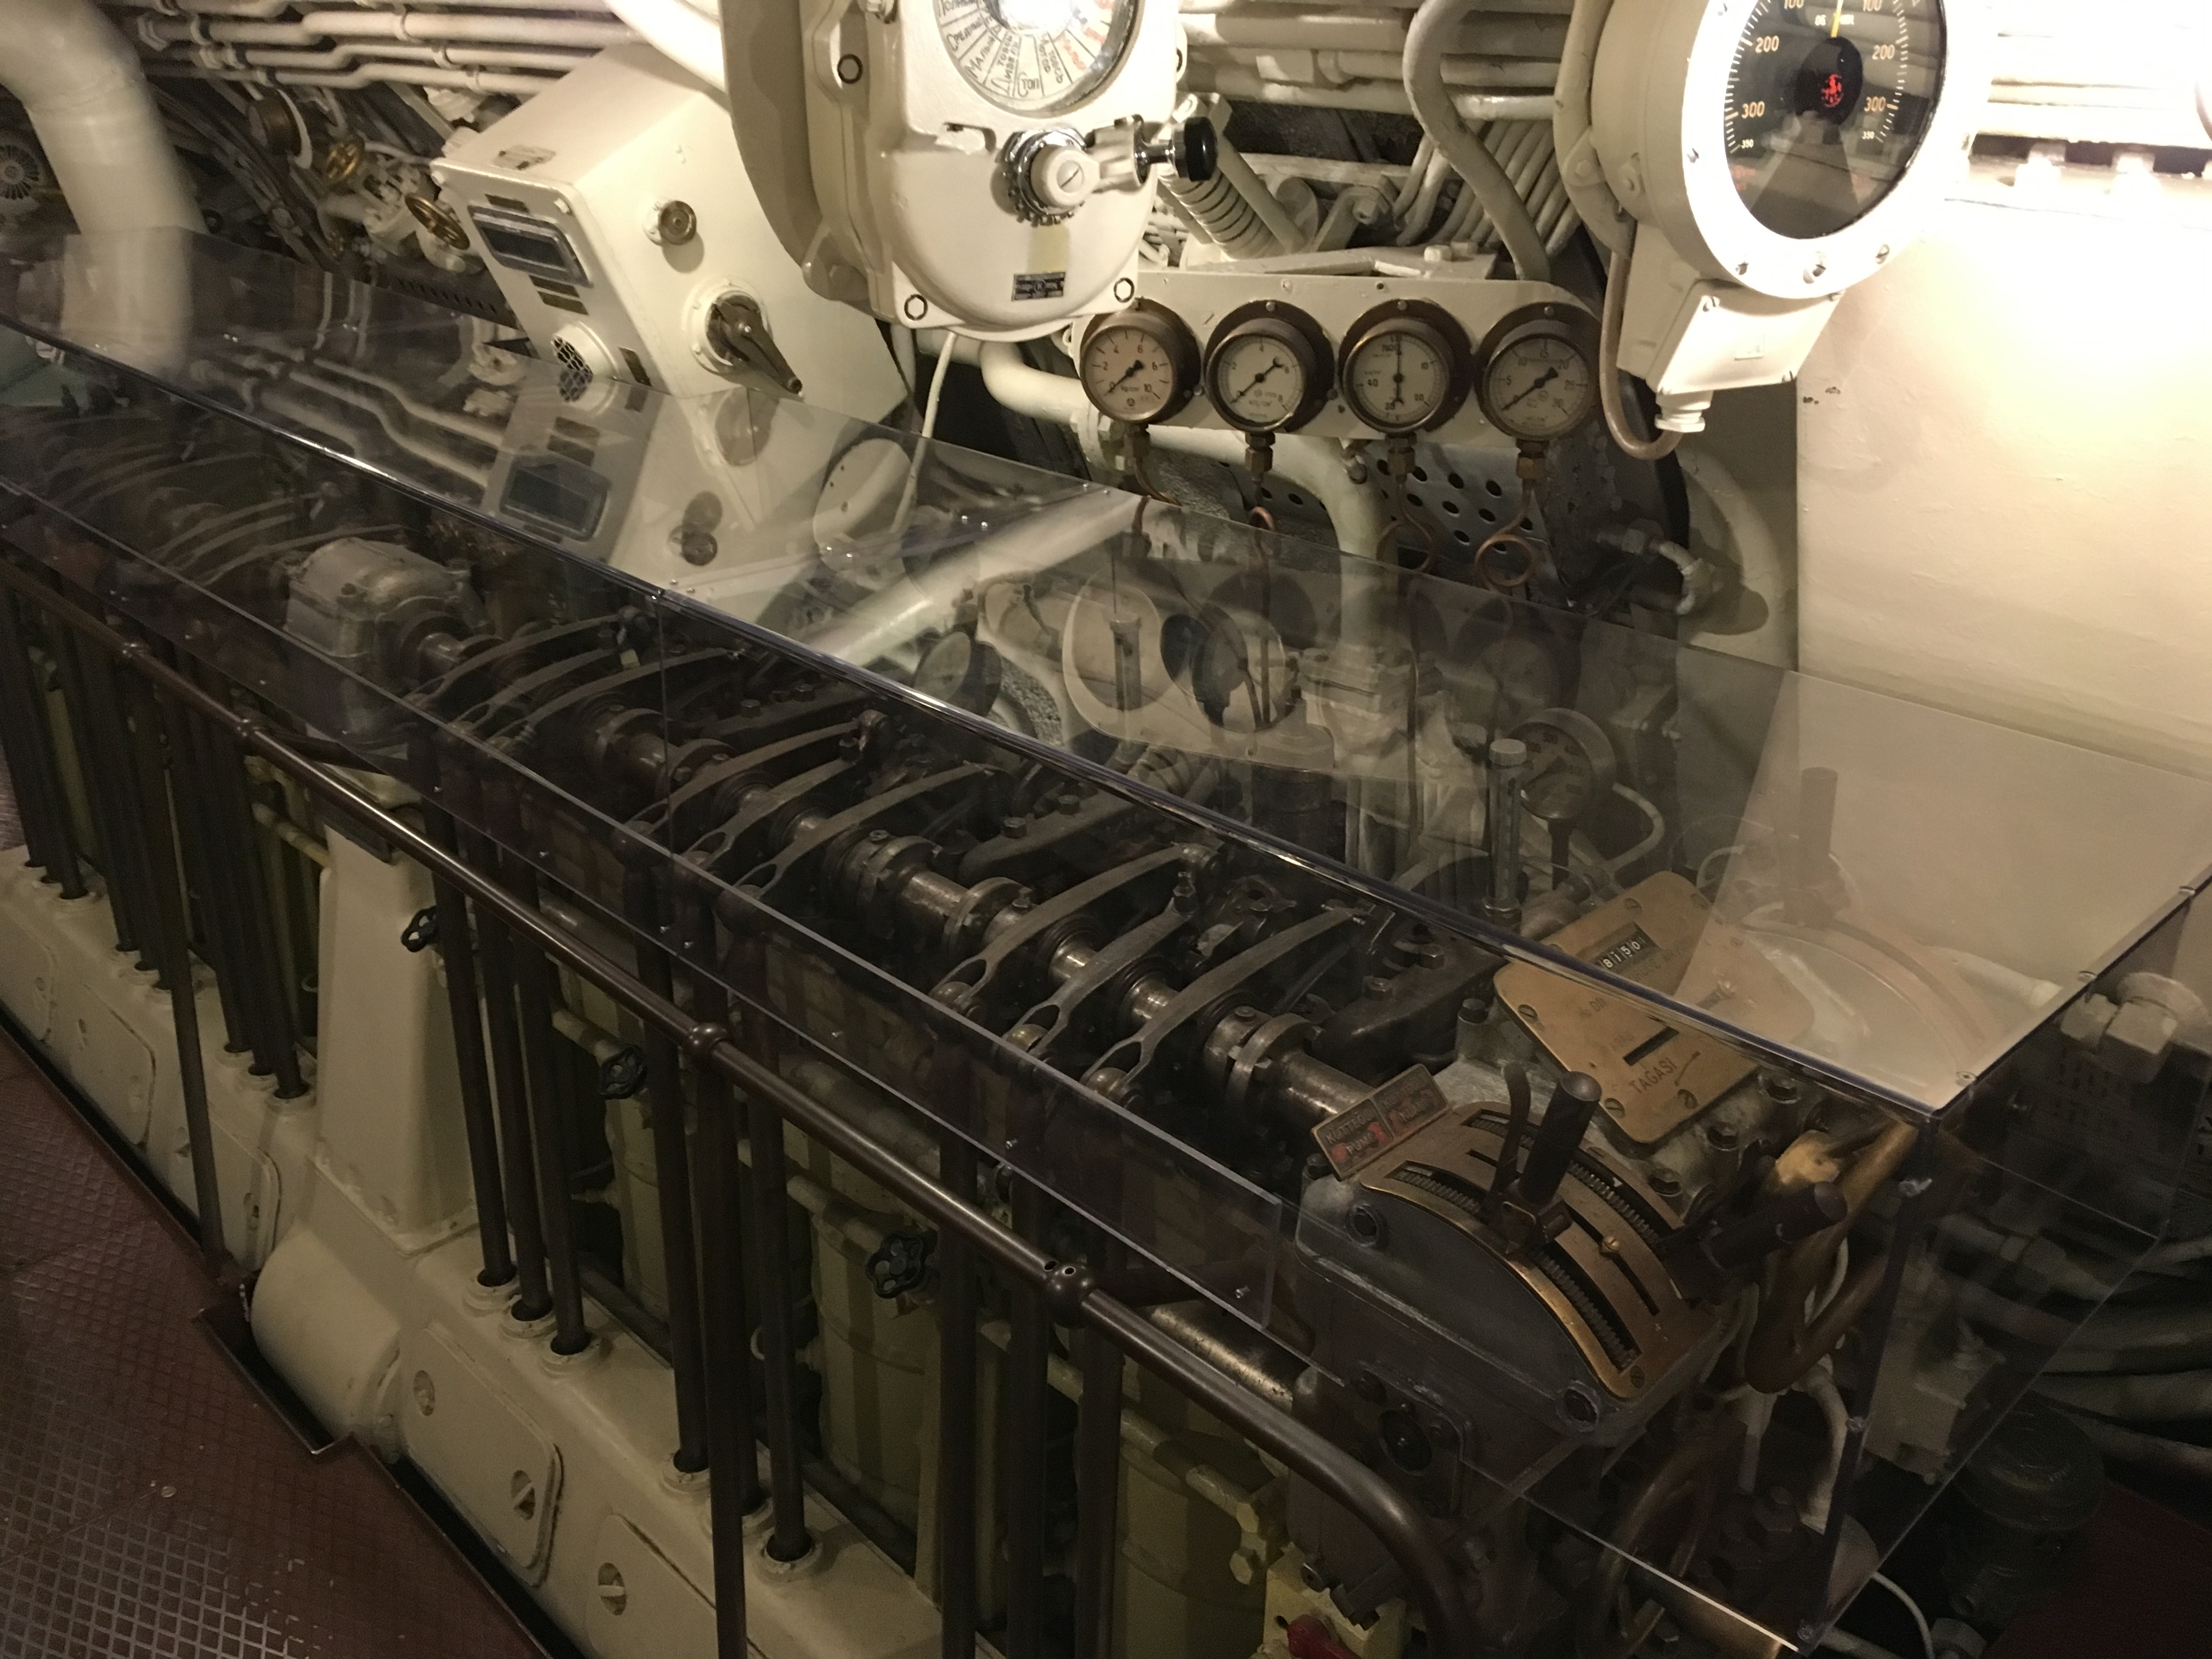 Lembit submarine, Estonian Maritime Museum in Tallinn